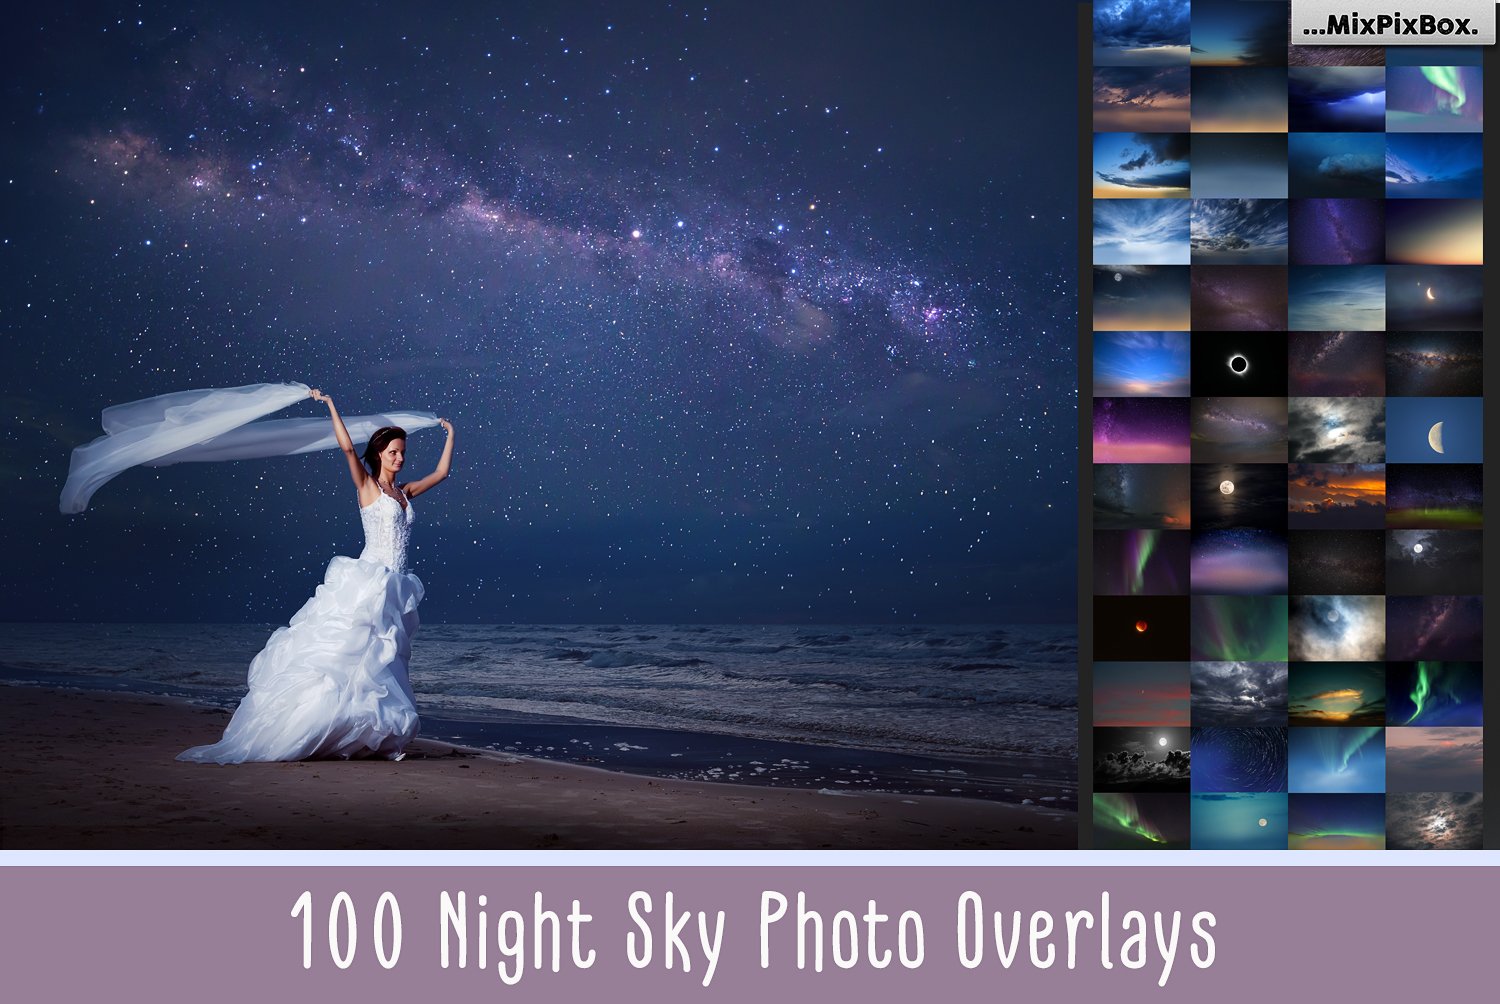 100 Night Sky Overlayscover image.